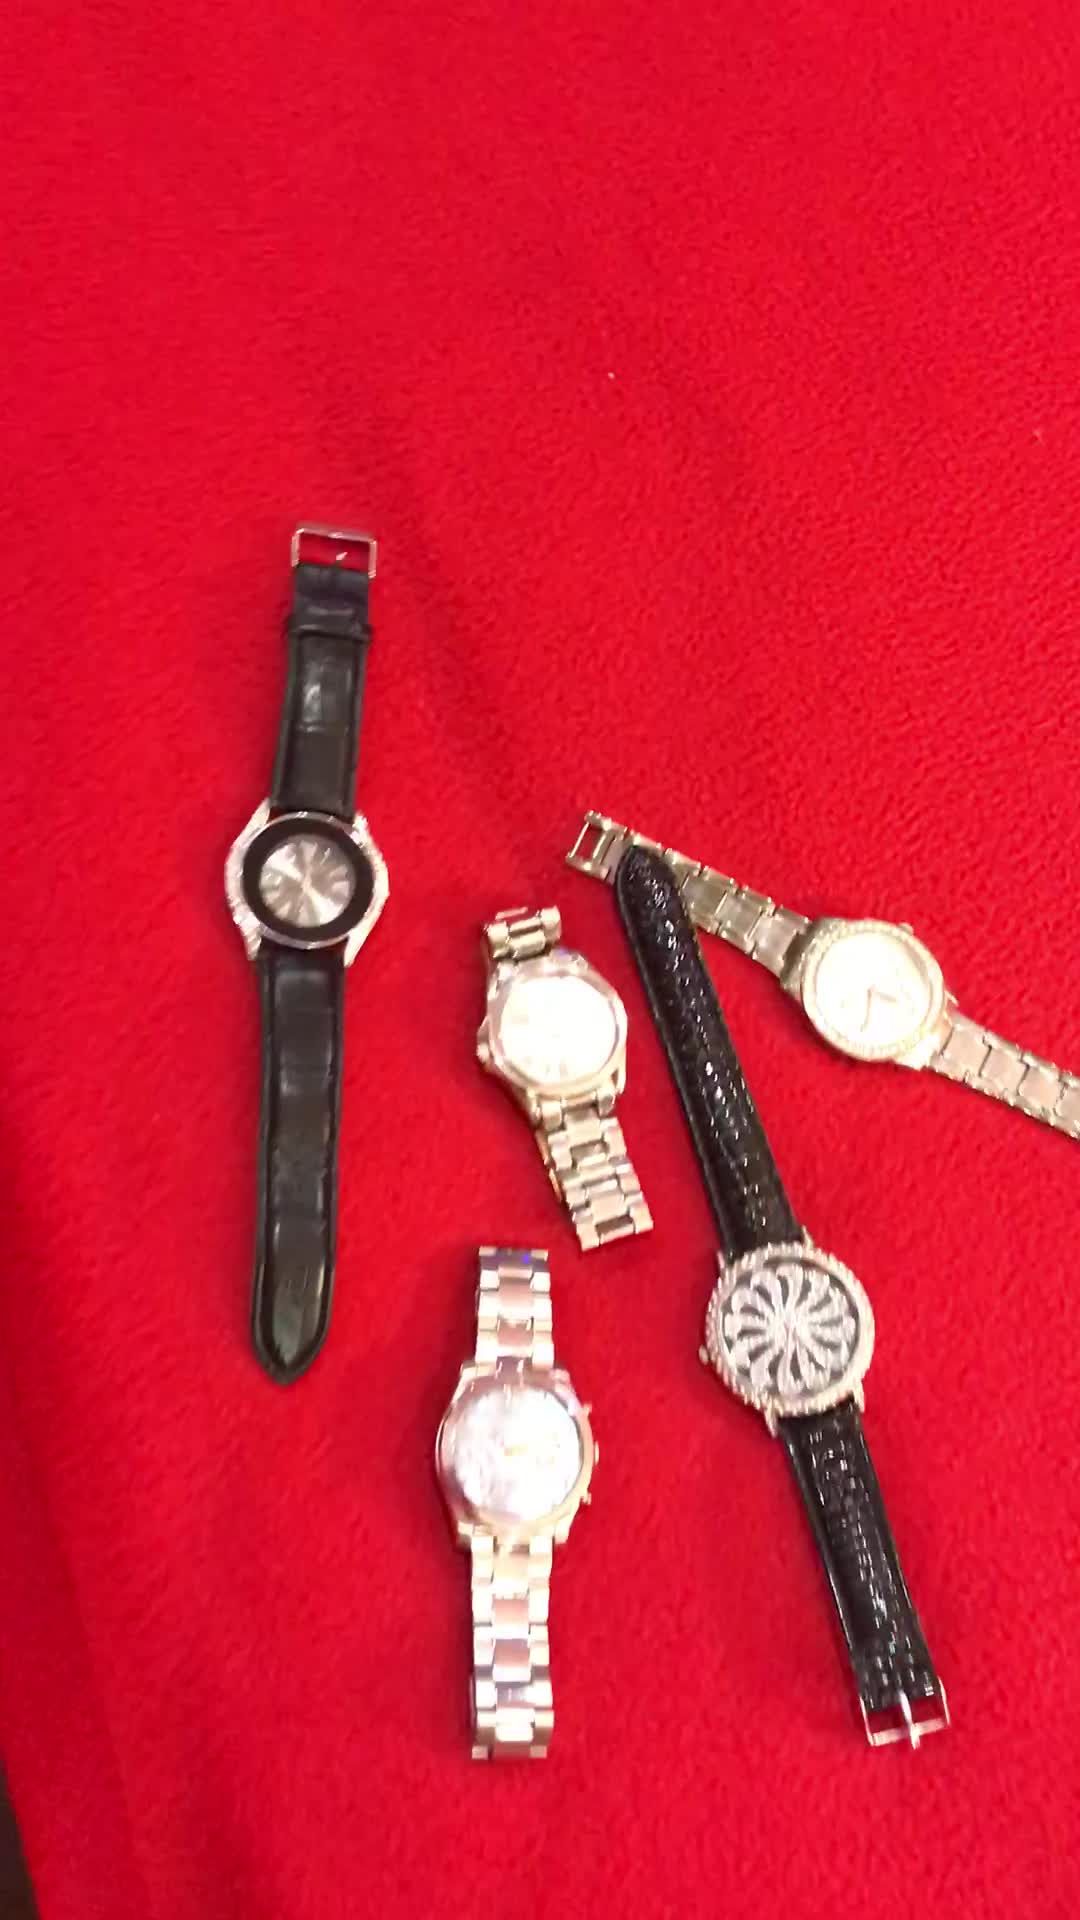 Wrist watch fetish